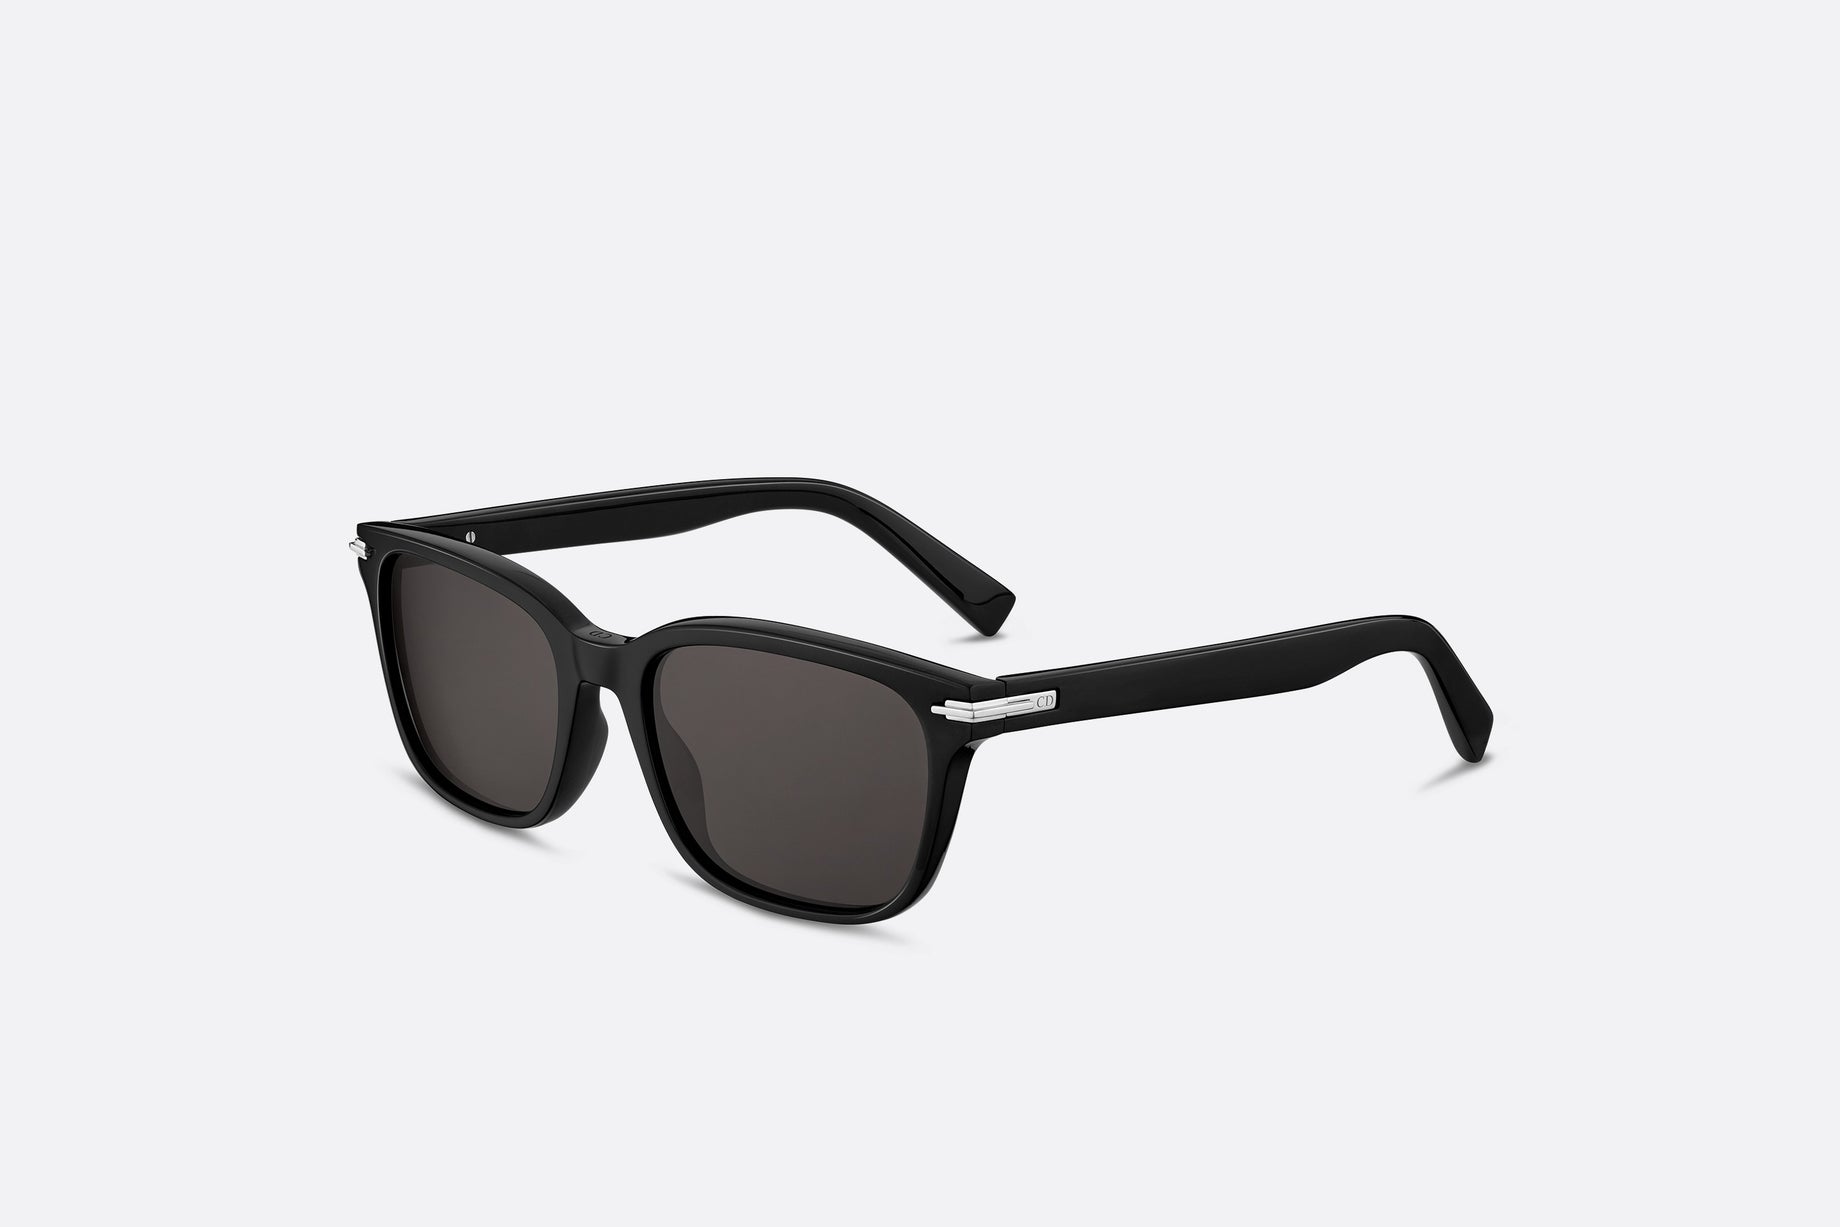 DiorBlackSuit SI • Black Rectangular Sunglasses